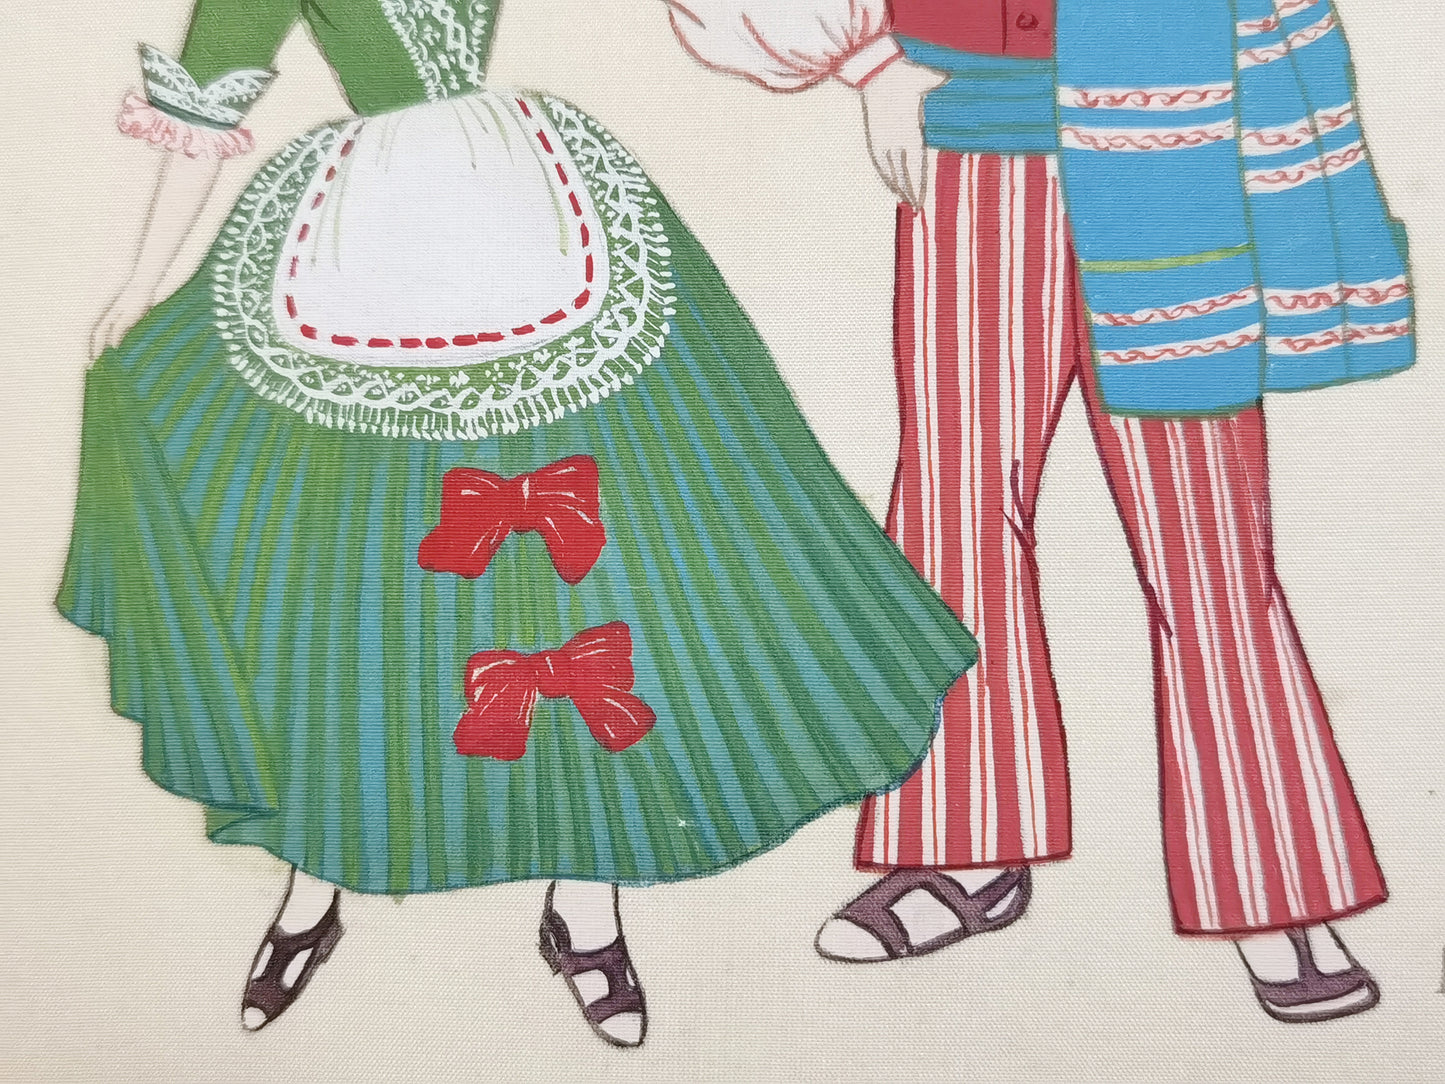 Malta Folk Costume Handmade Art Printing with Wood Frame